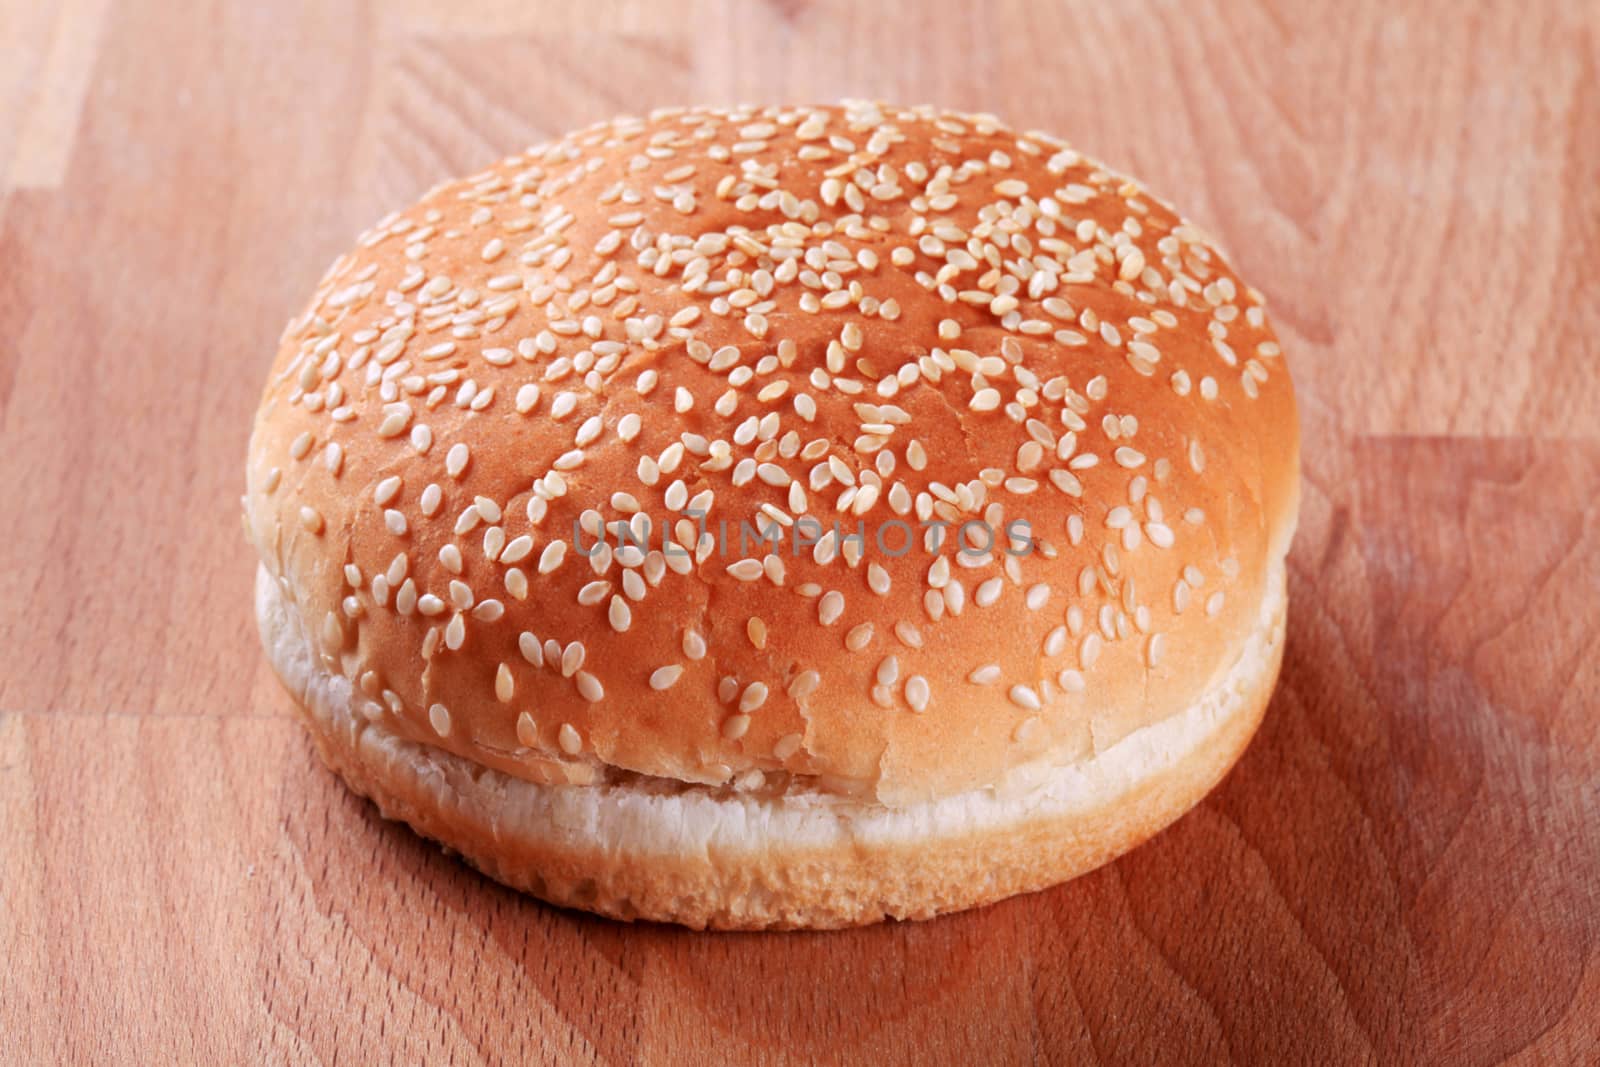 Hamburger bun by Digifoodstock